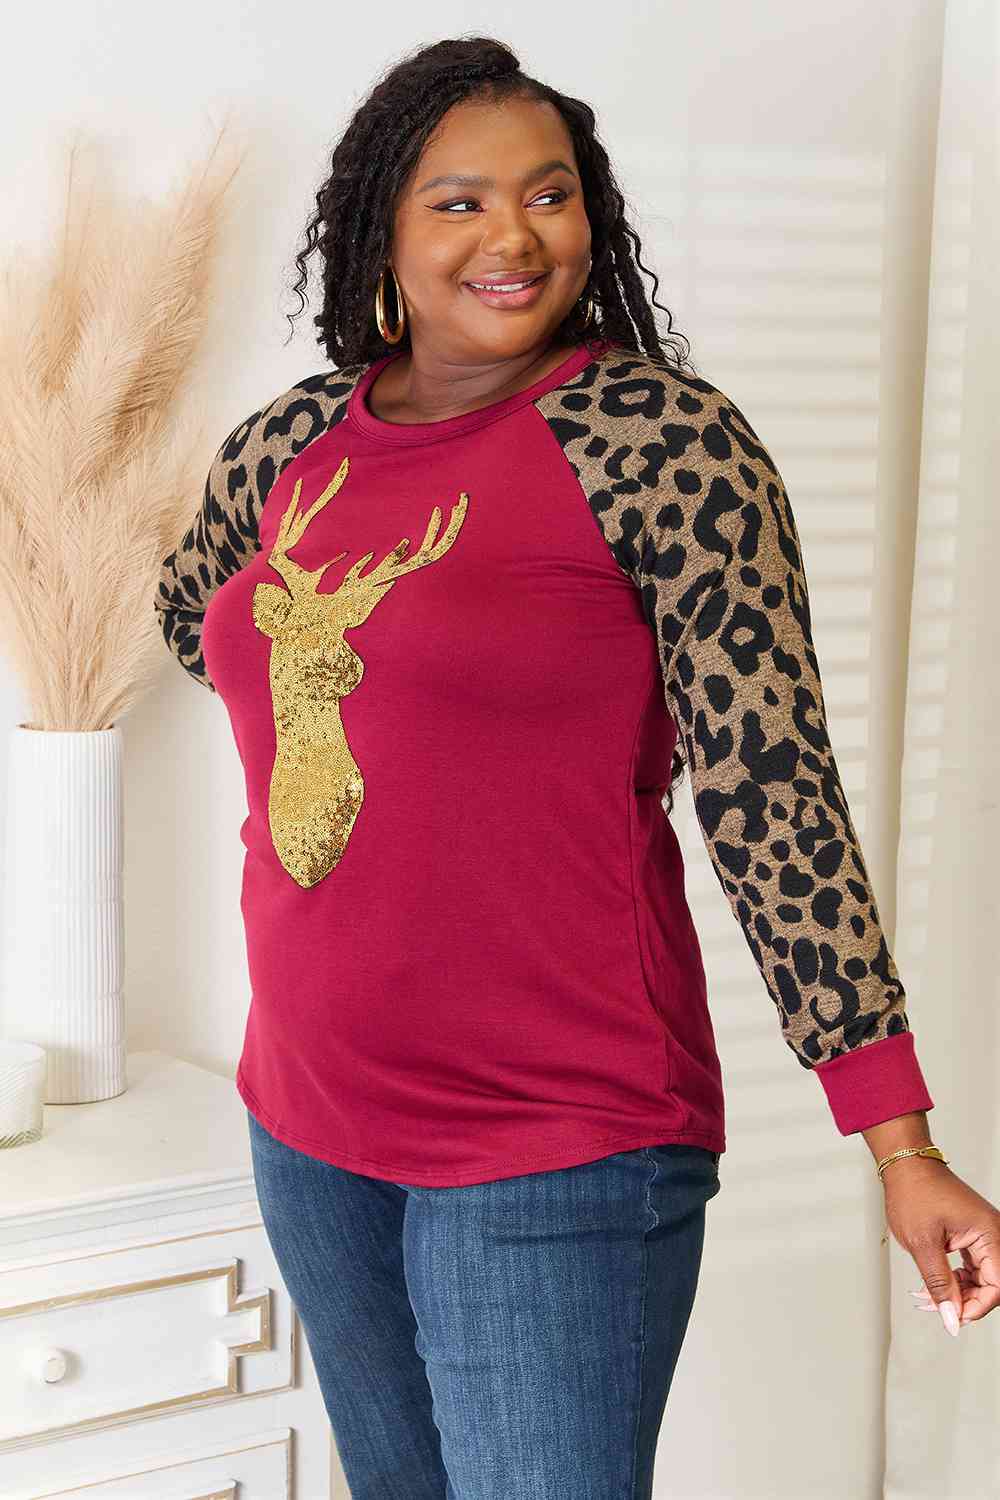 Heimish Full Size Christmas Animal Print Reindeer Top